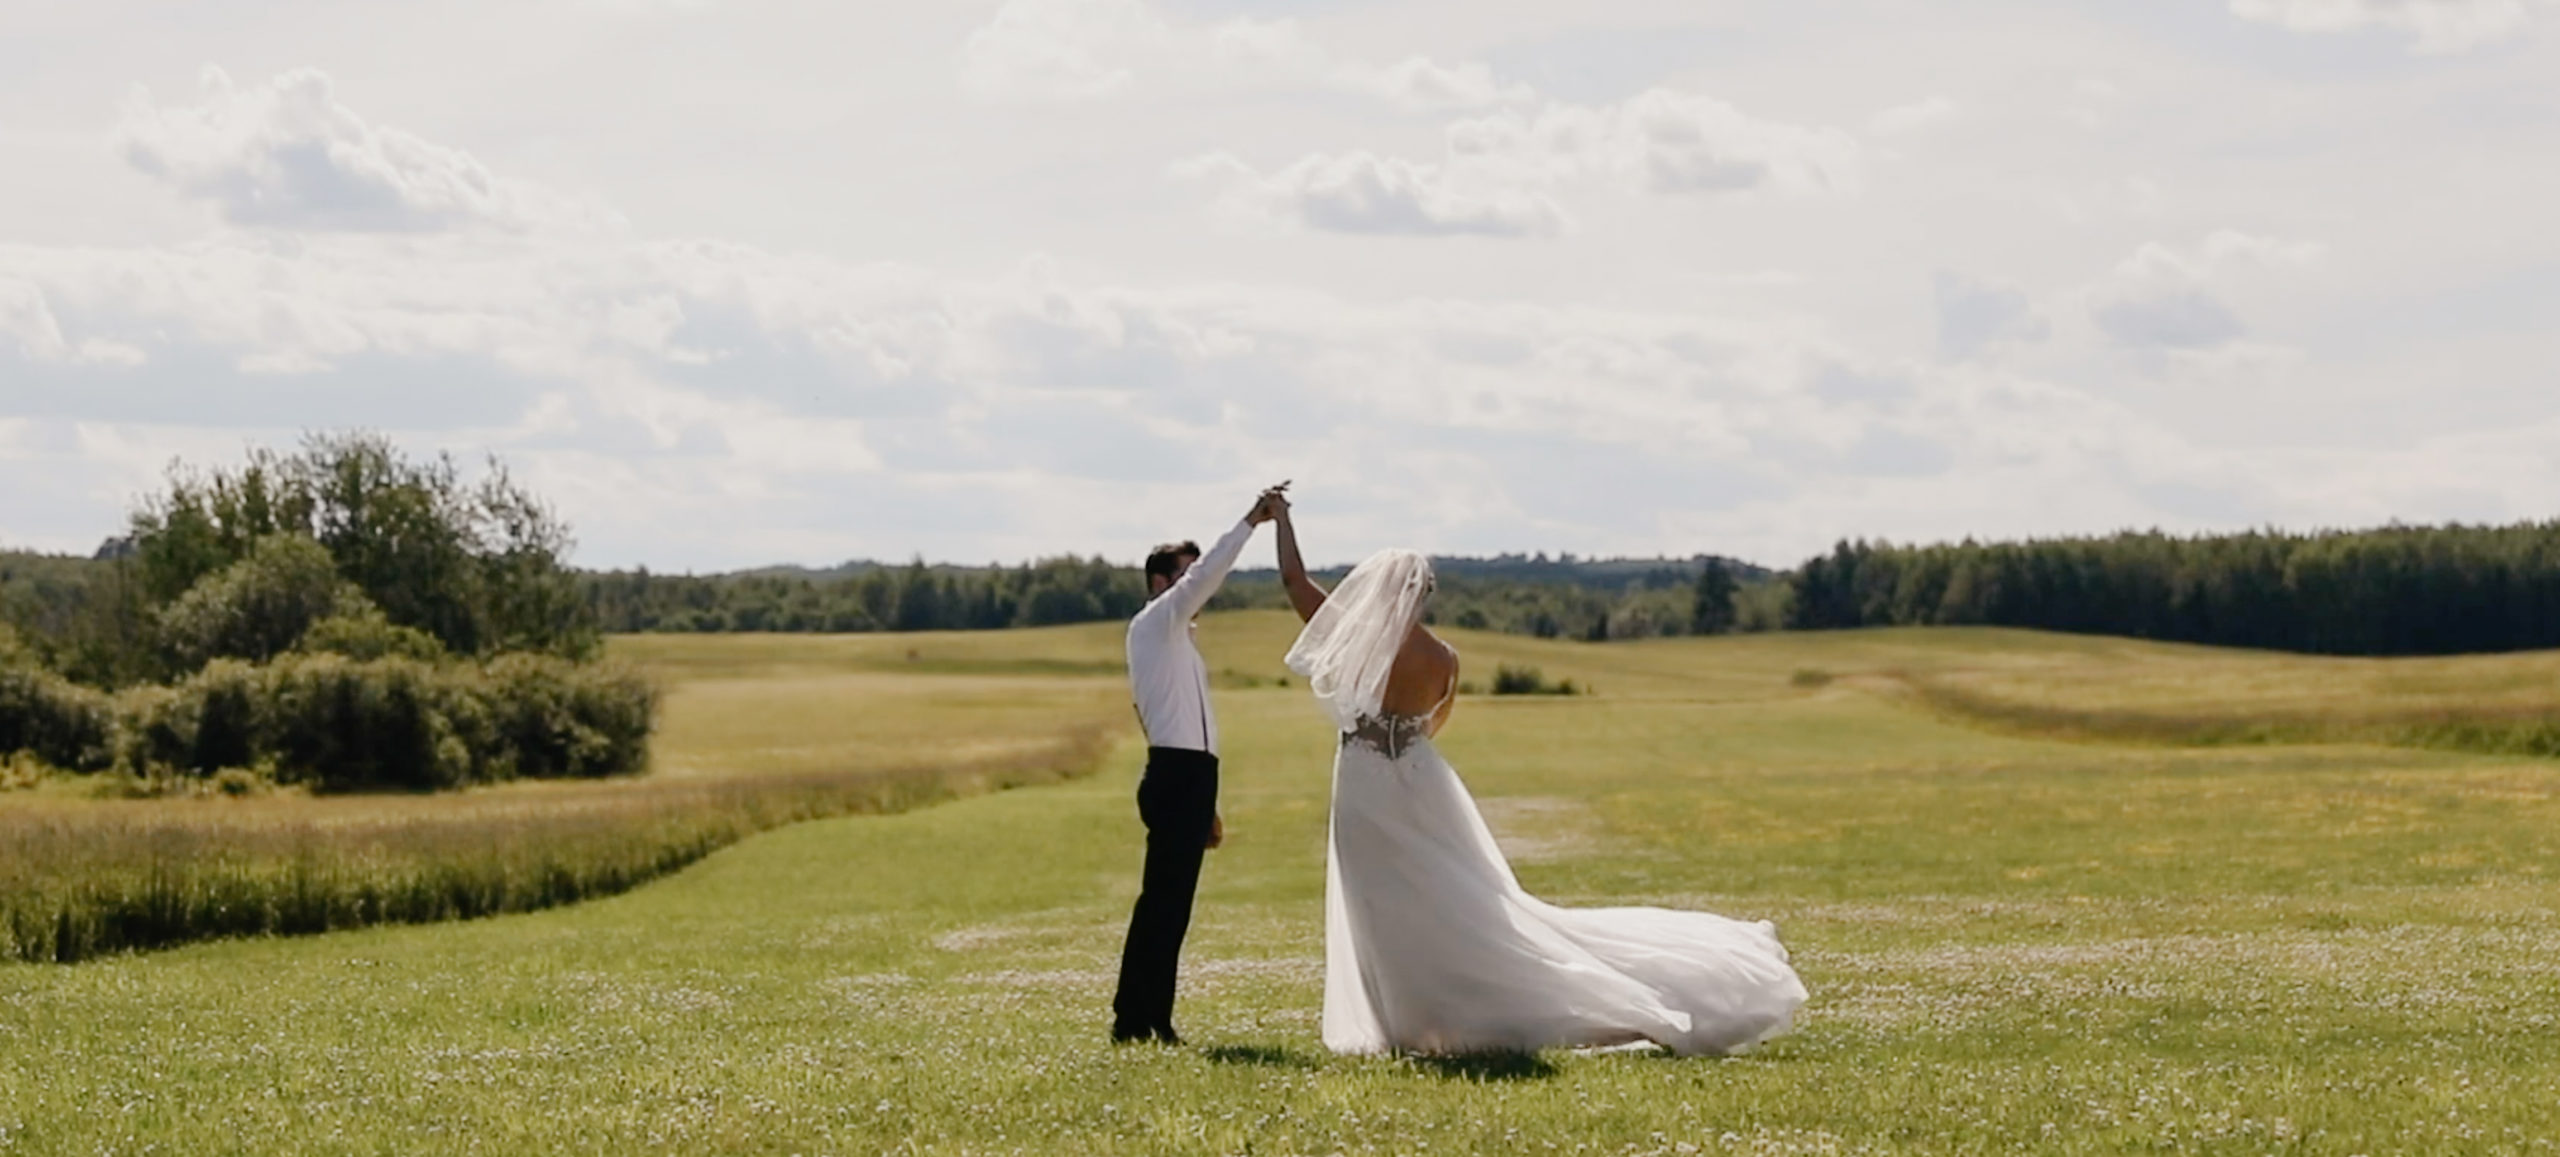 Bridal couple dancing in an open field